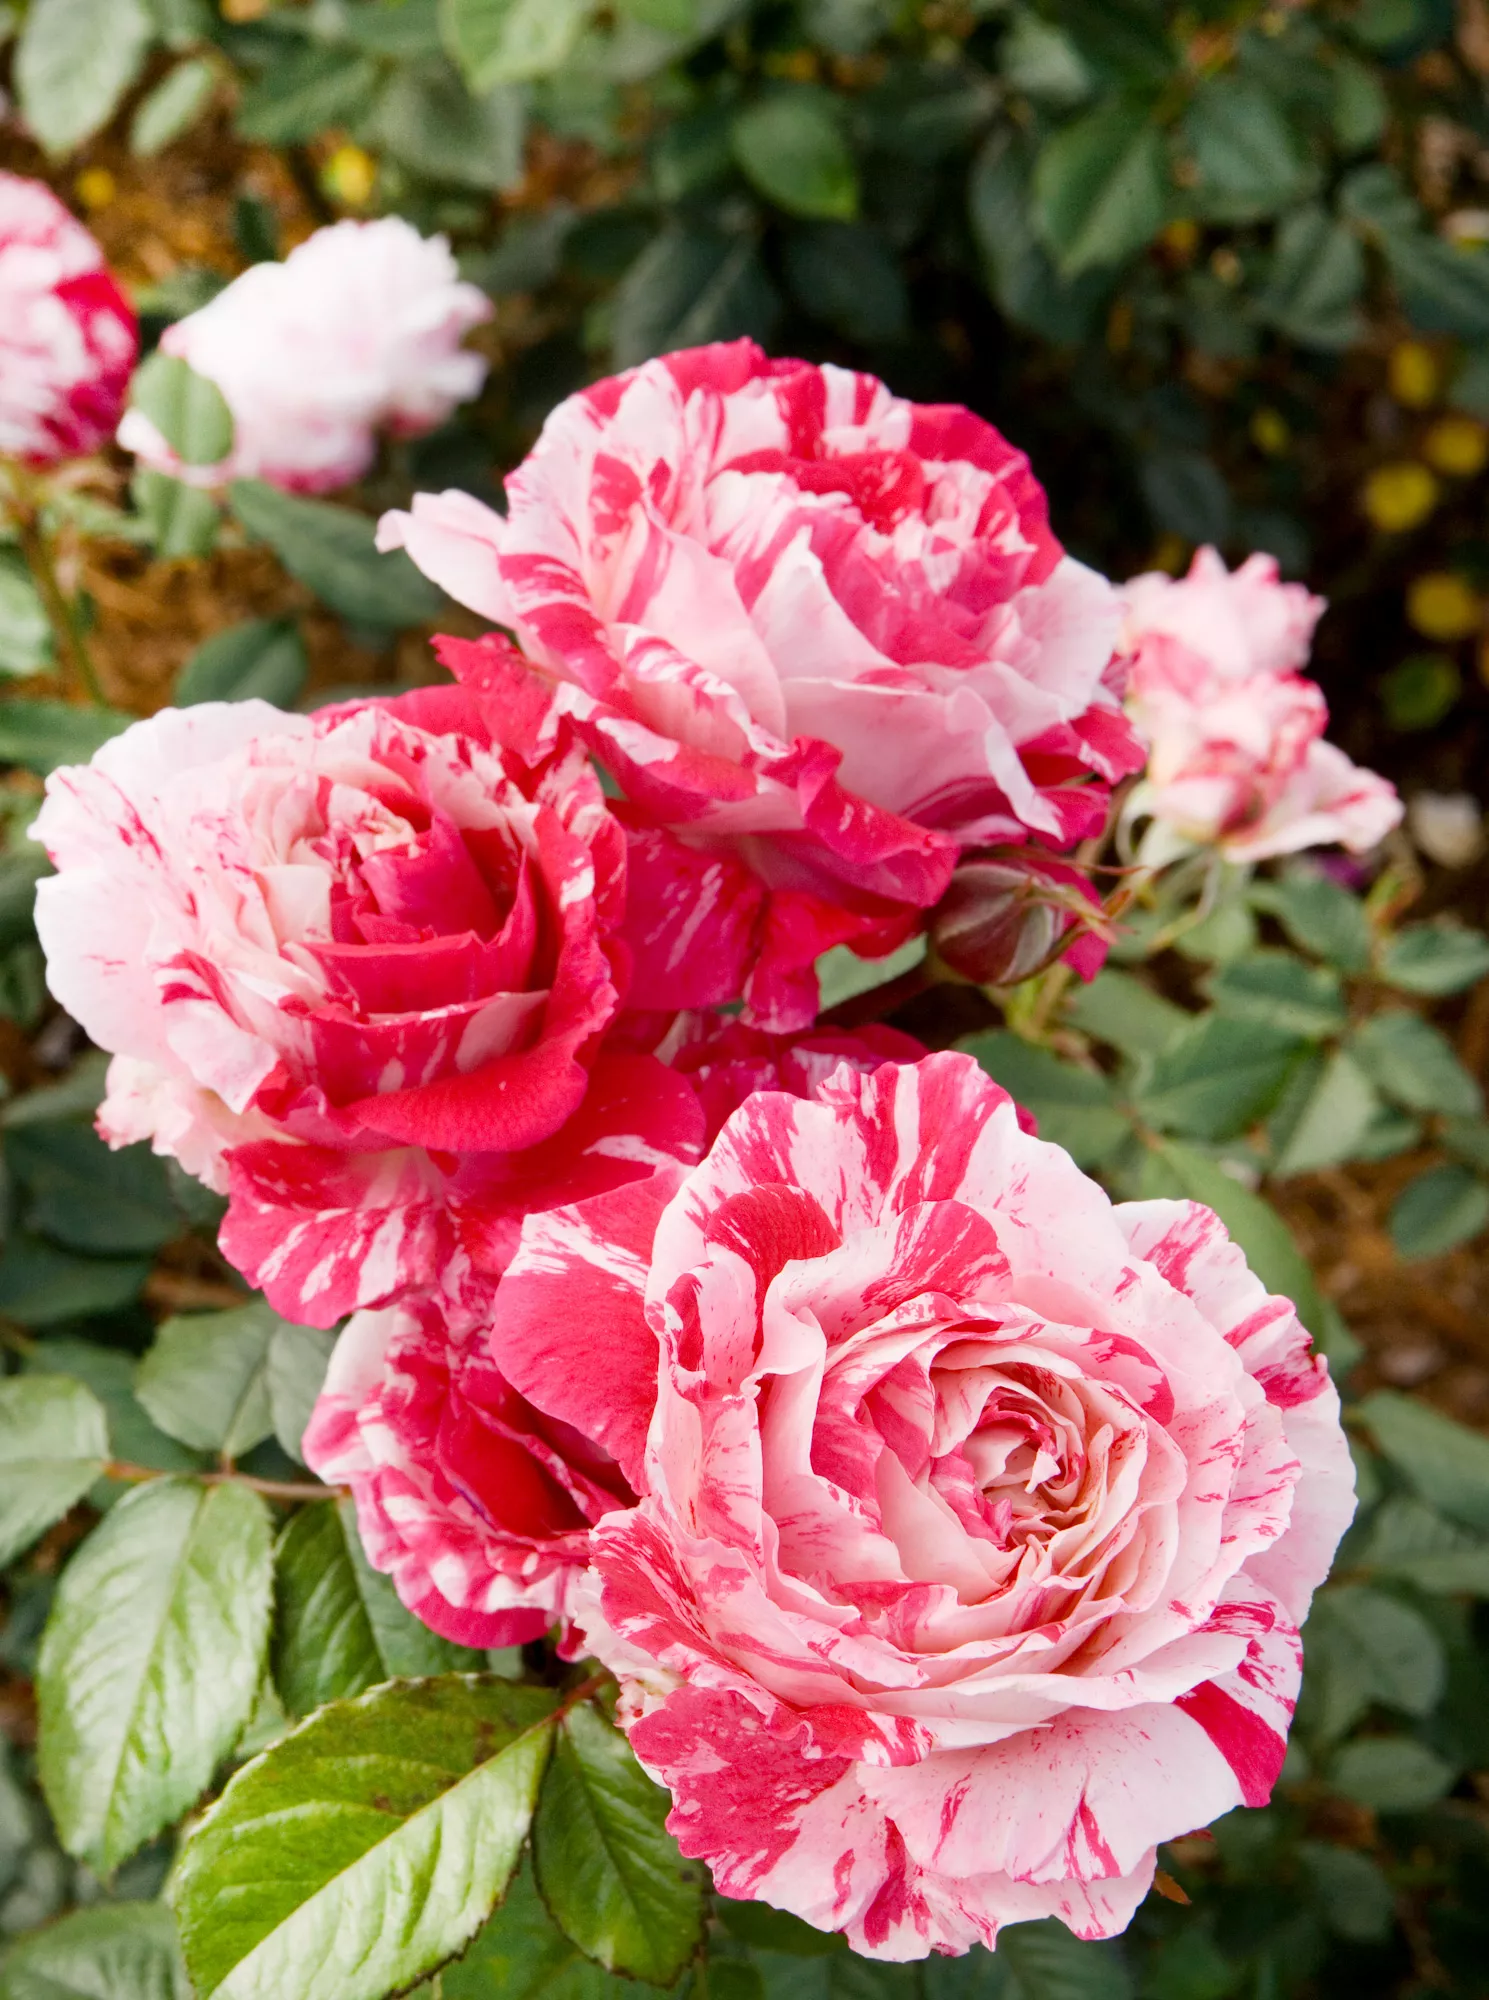 Scentimental Floribunda roses